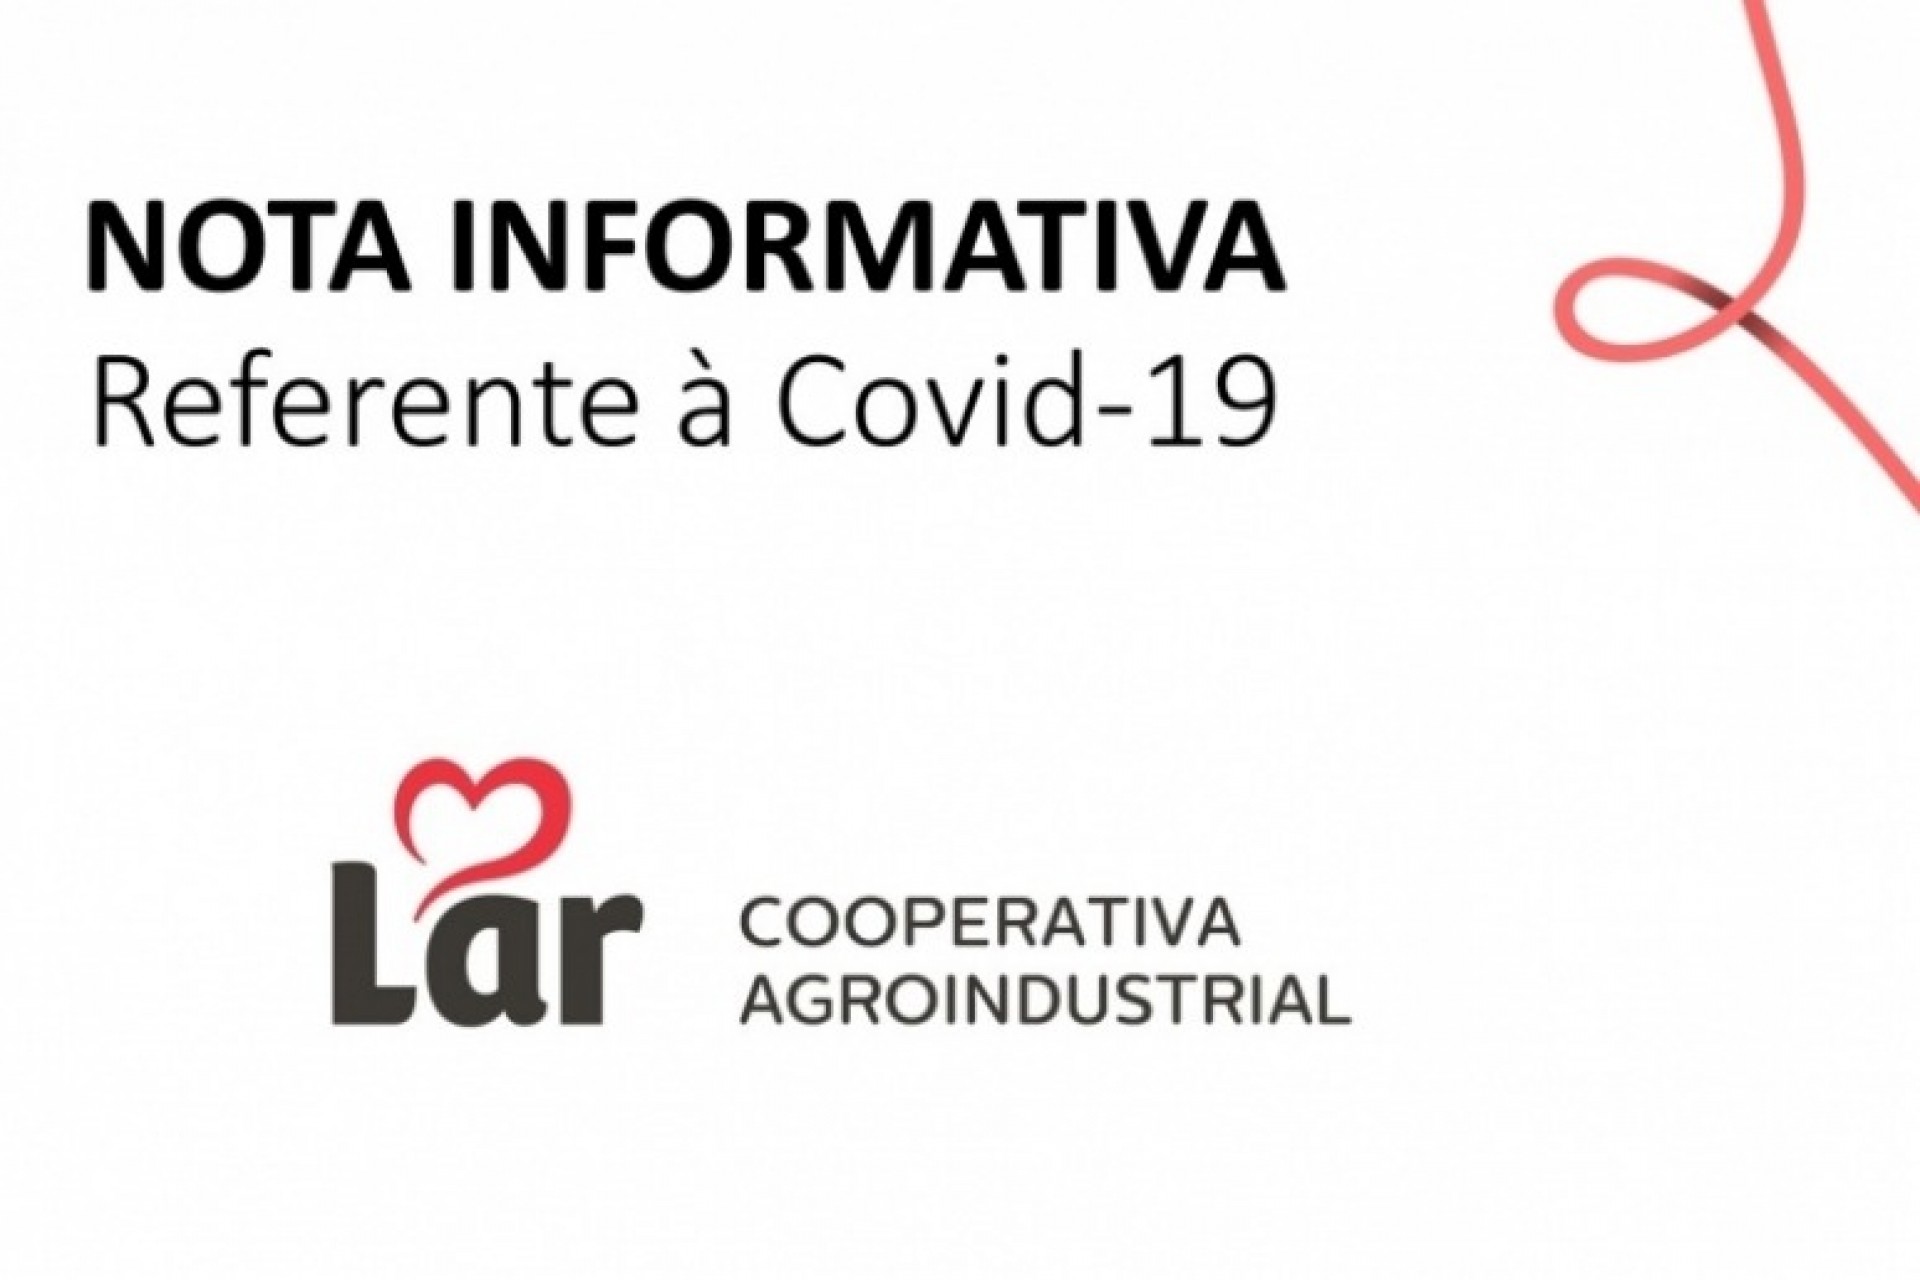 Nota Informativa referente à Covid-19 - Lar Cooperativa Agroindustrial